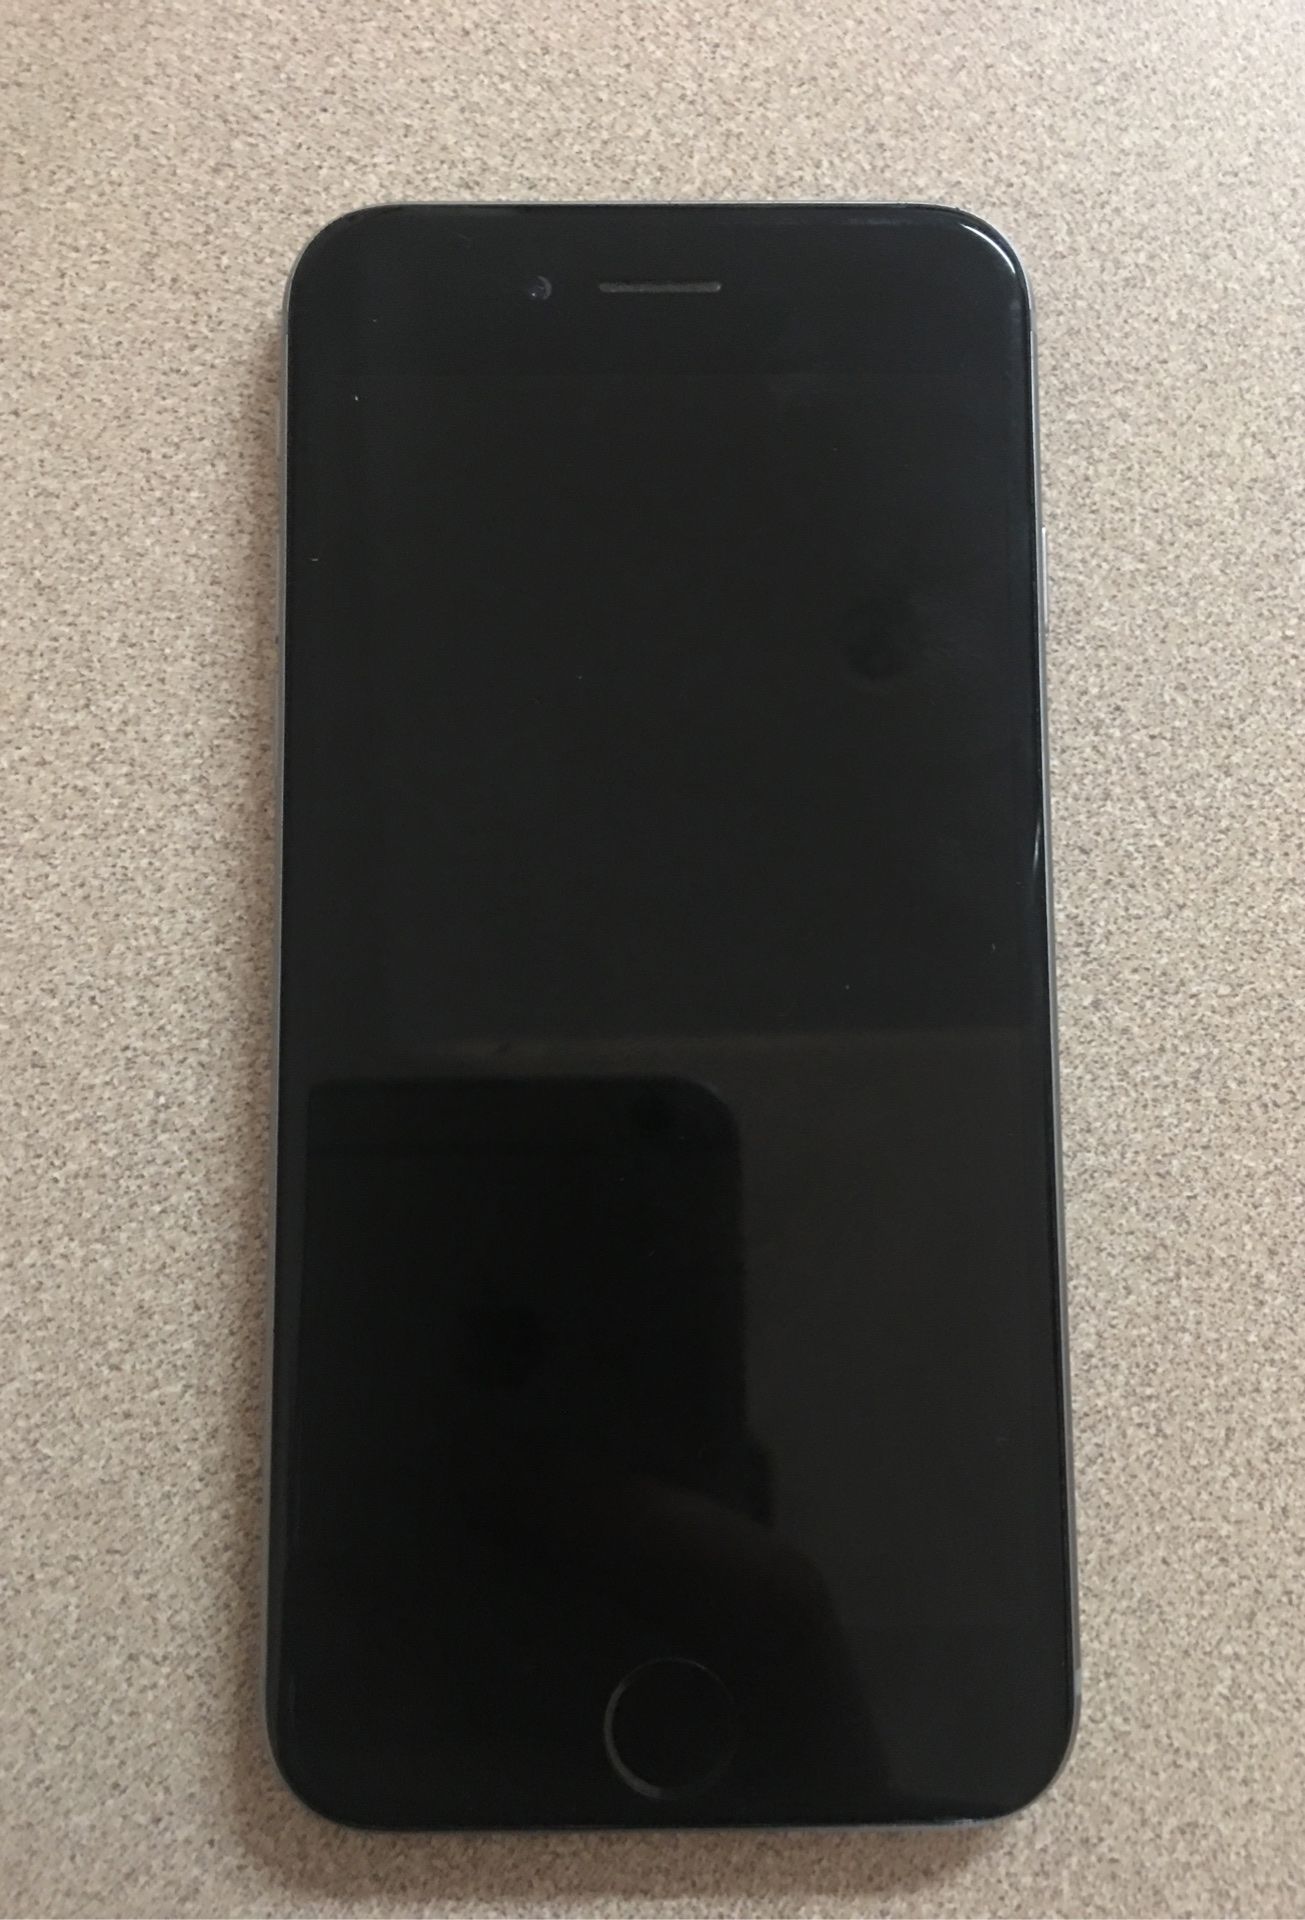 iPhone 6 Black 16GB Unlocked